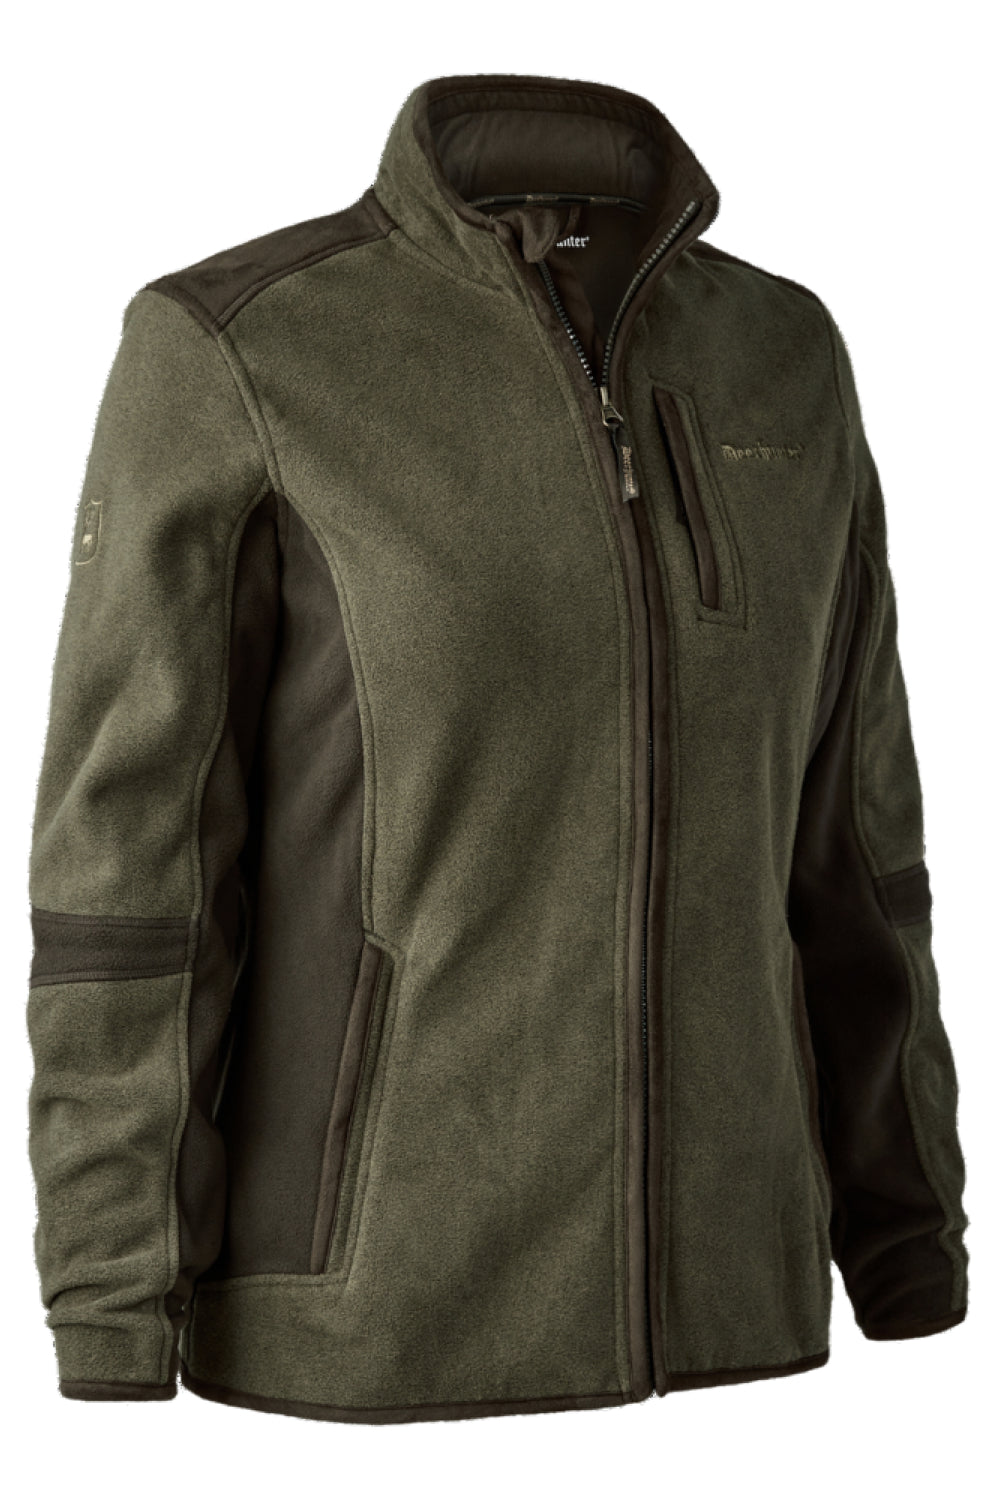 Deerhunter Lady Pam Bonded Fleece Jacket in Graphite Green